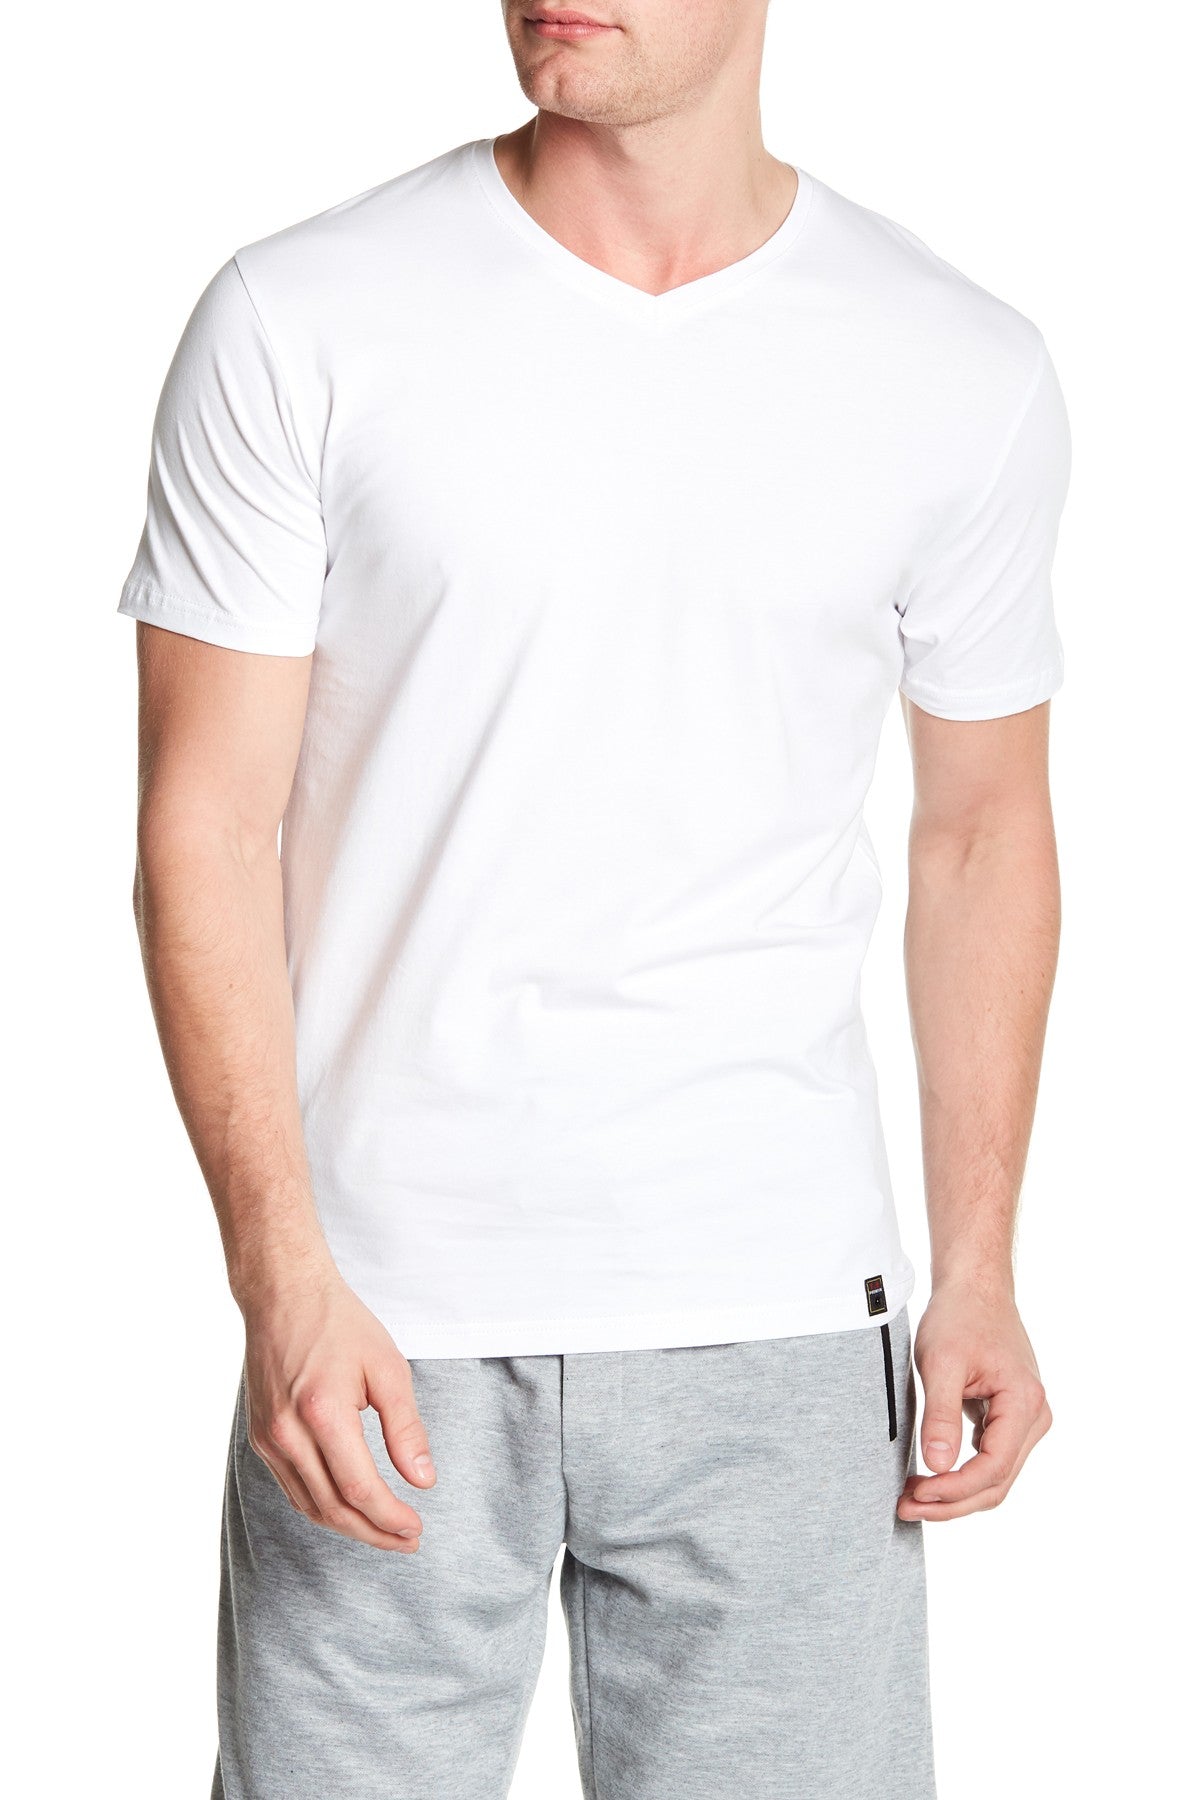 TRPremium Men\'s T-Shirt – Solid V-Neck